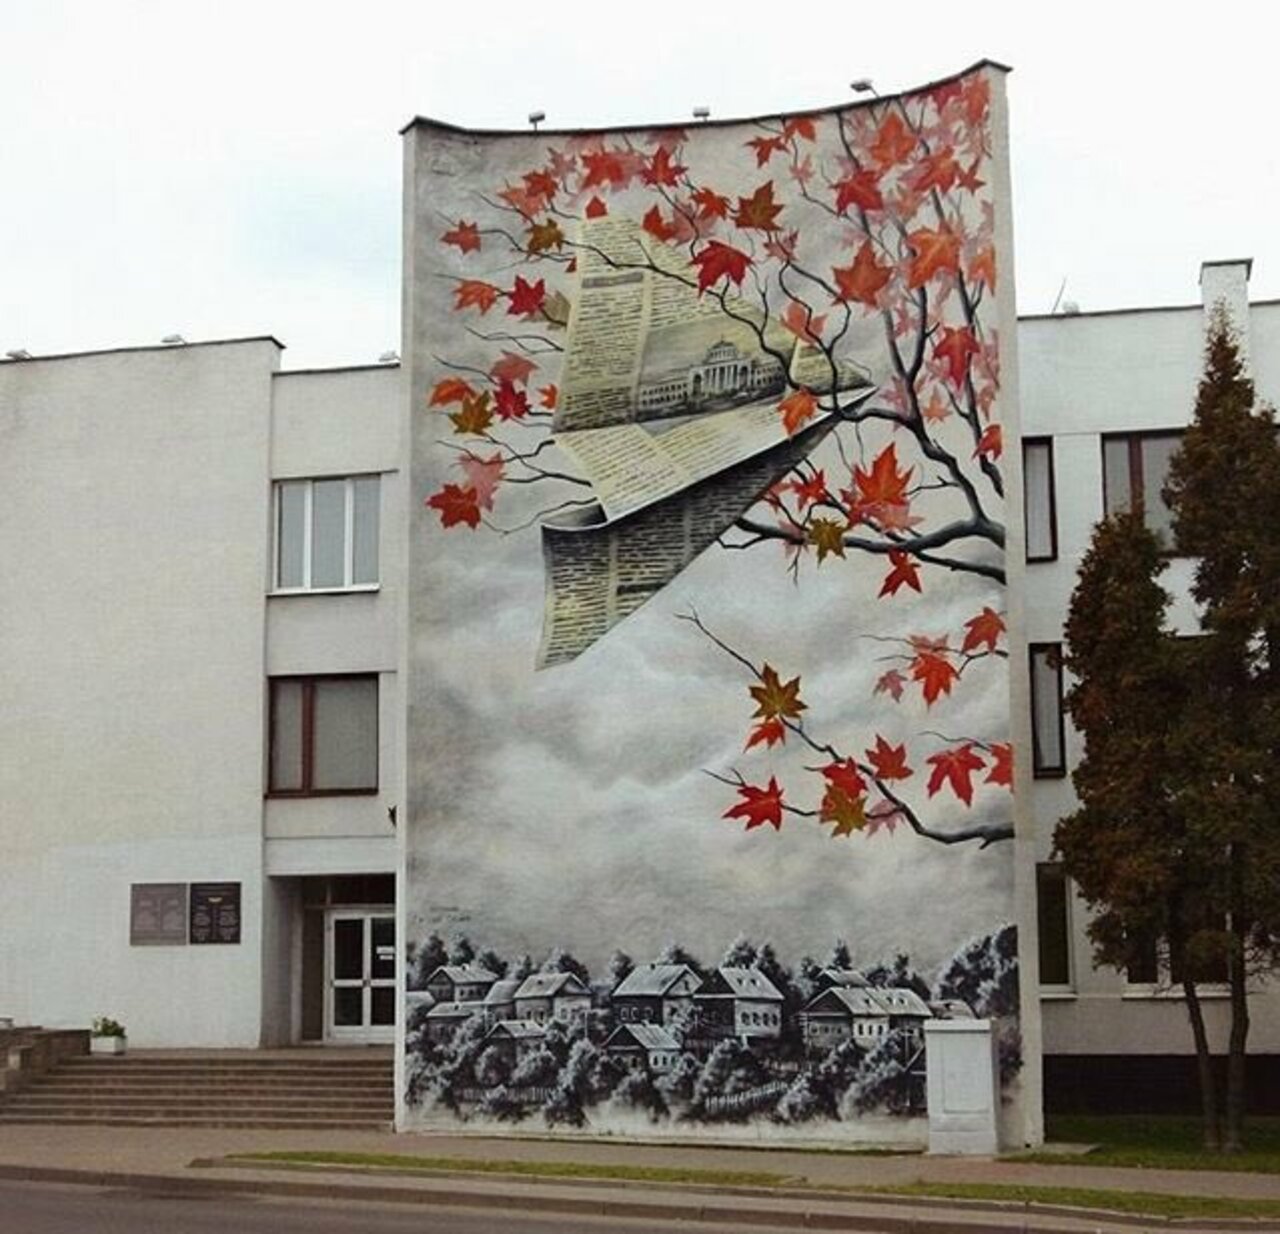 RT belilac "RT belilac "New Street Art by MUTUS in Belarus 

#art #graffiti #mural #streetart https://t.co/AGsyIY8nAV""